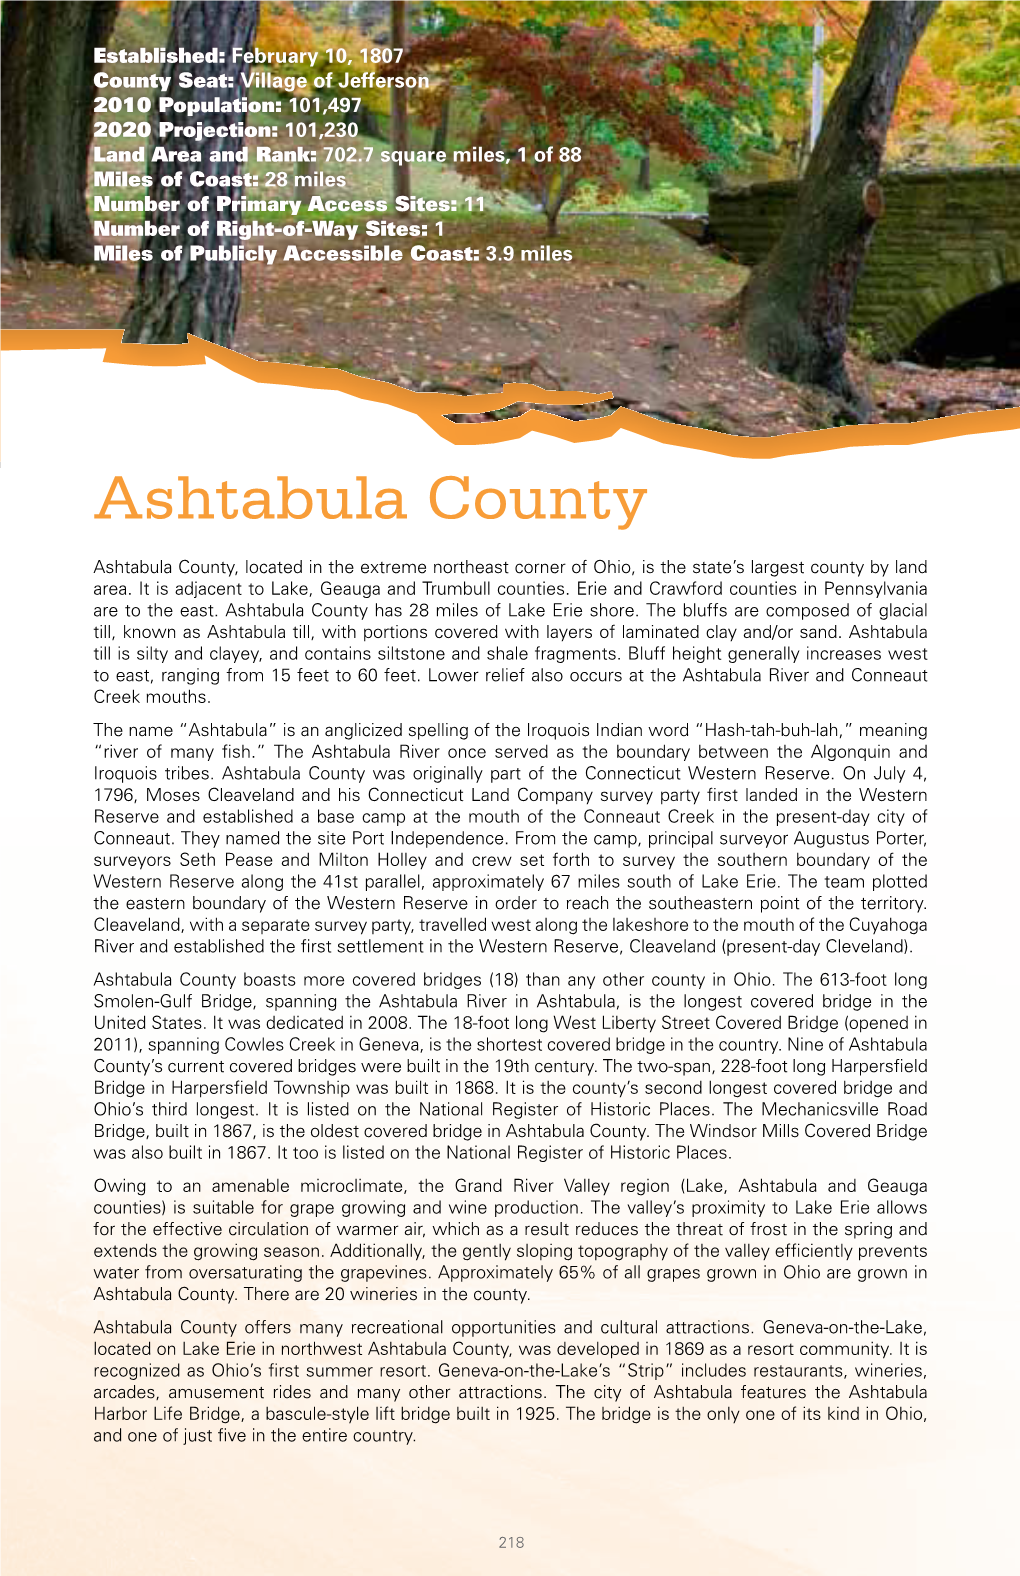 Ashtabula County